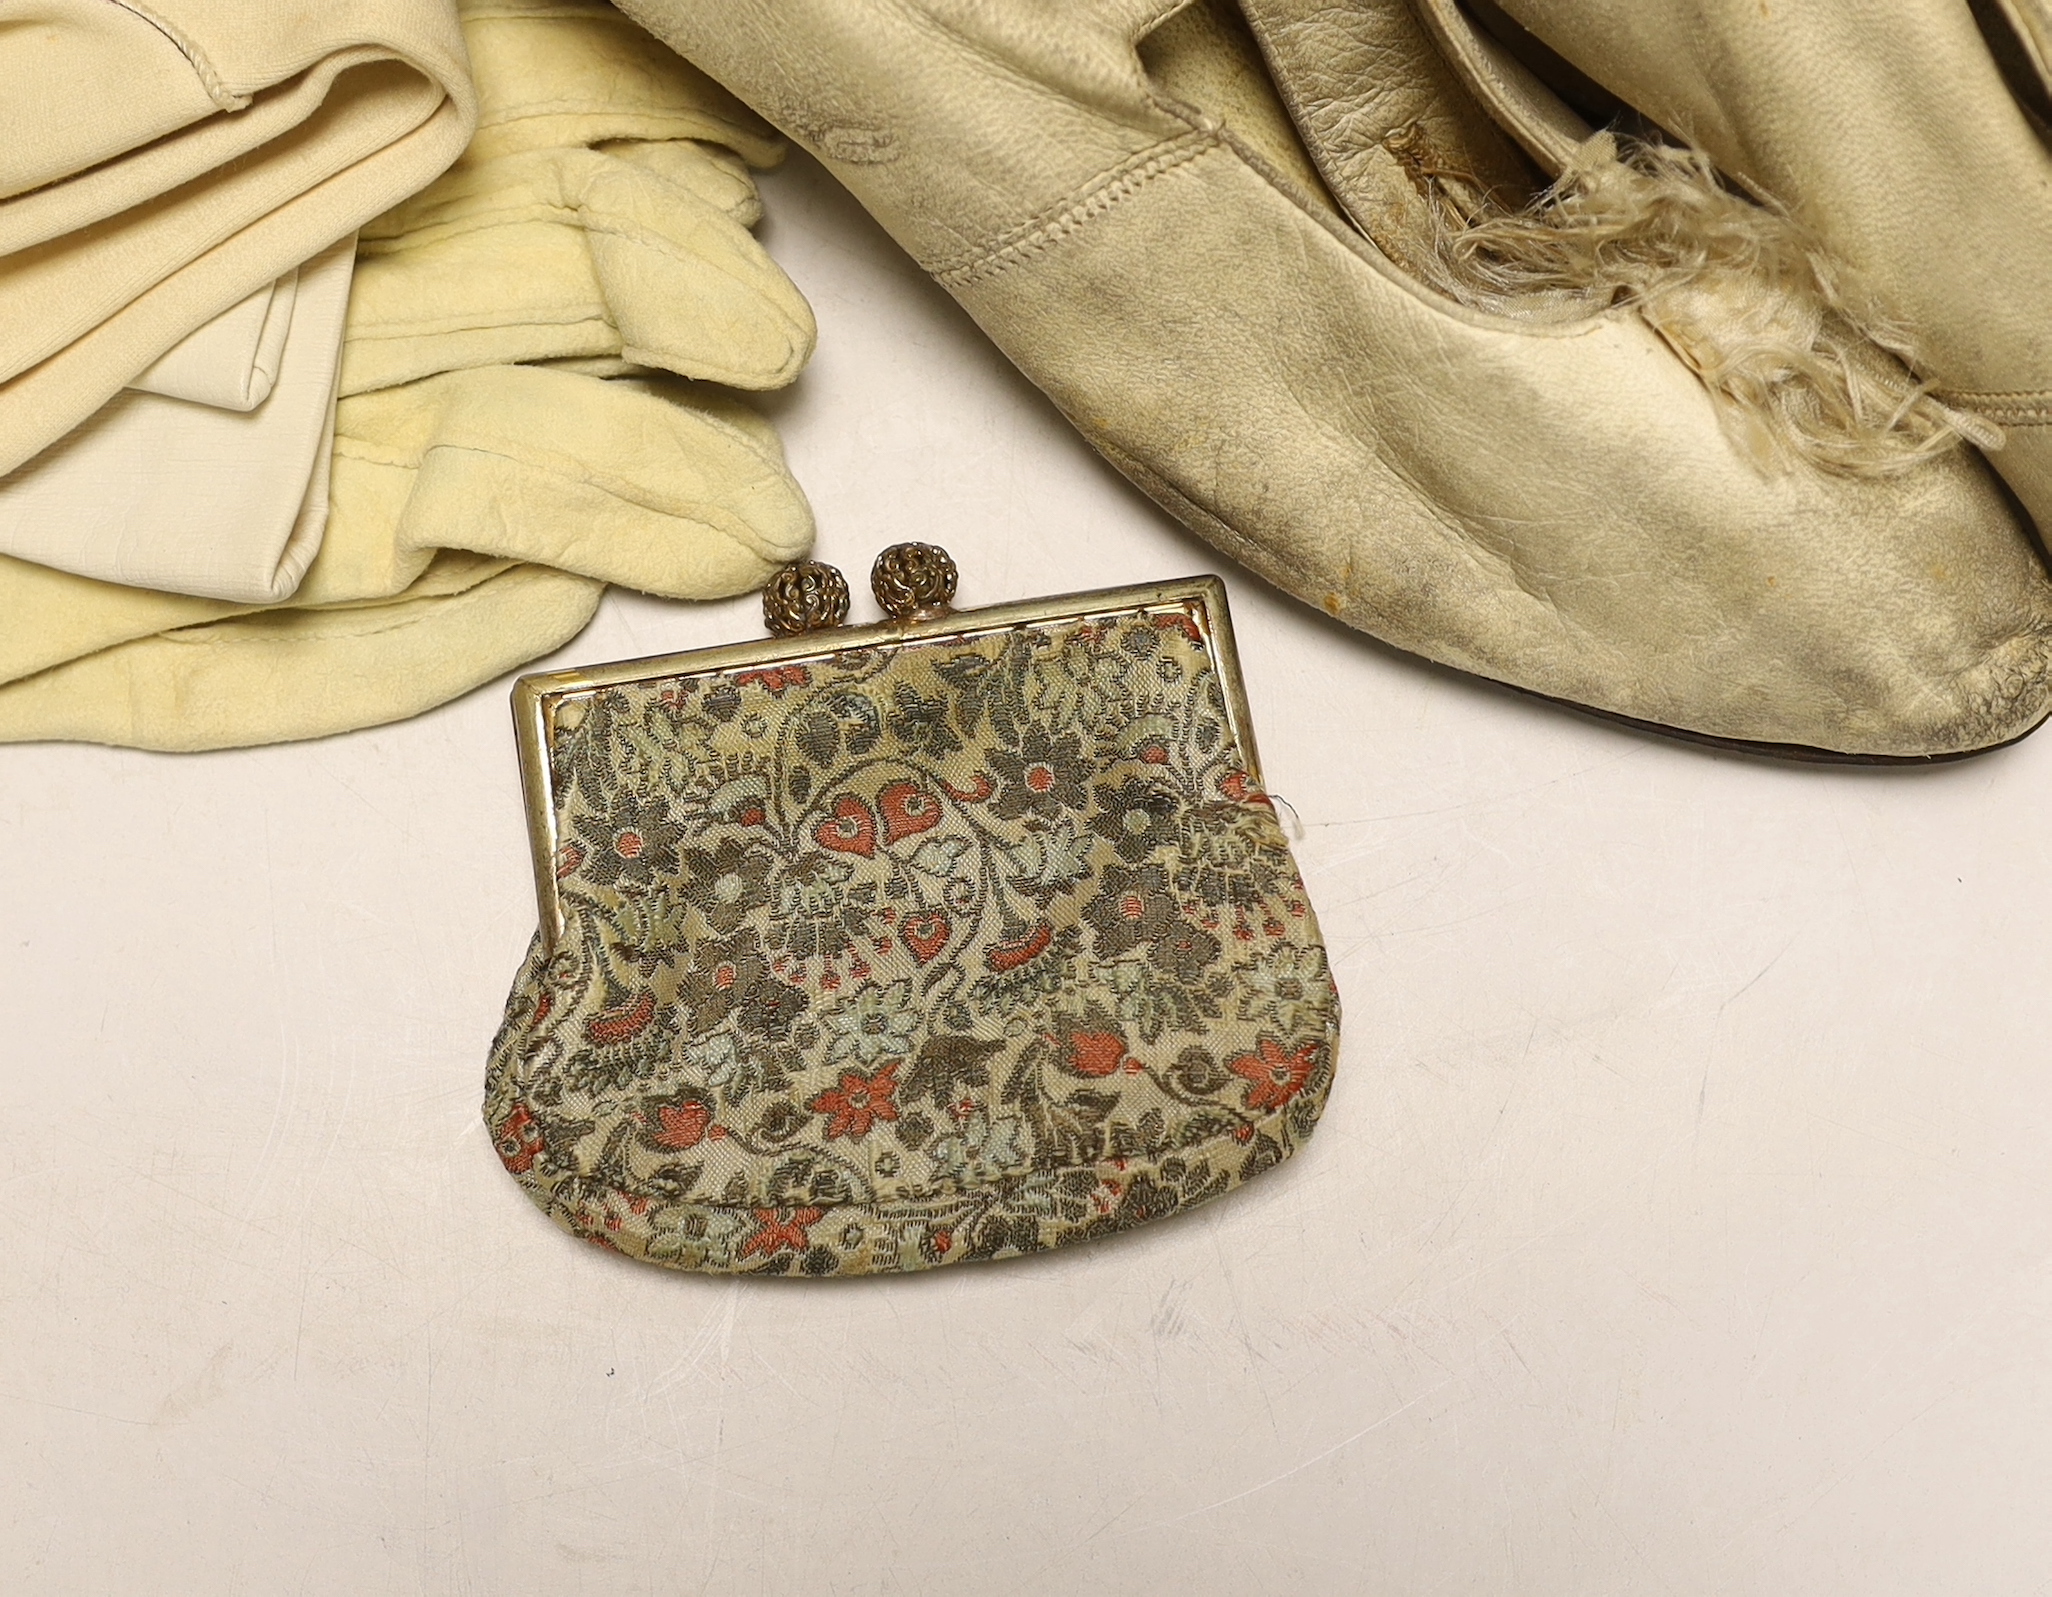 A pair of ladies Edwardian cream silk shoes, a snakeskin handbag, a 1940's clutch bag, etc.